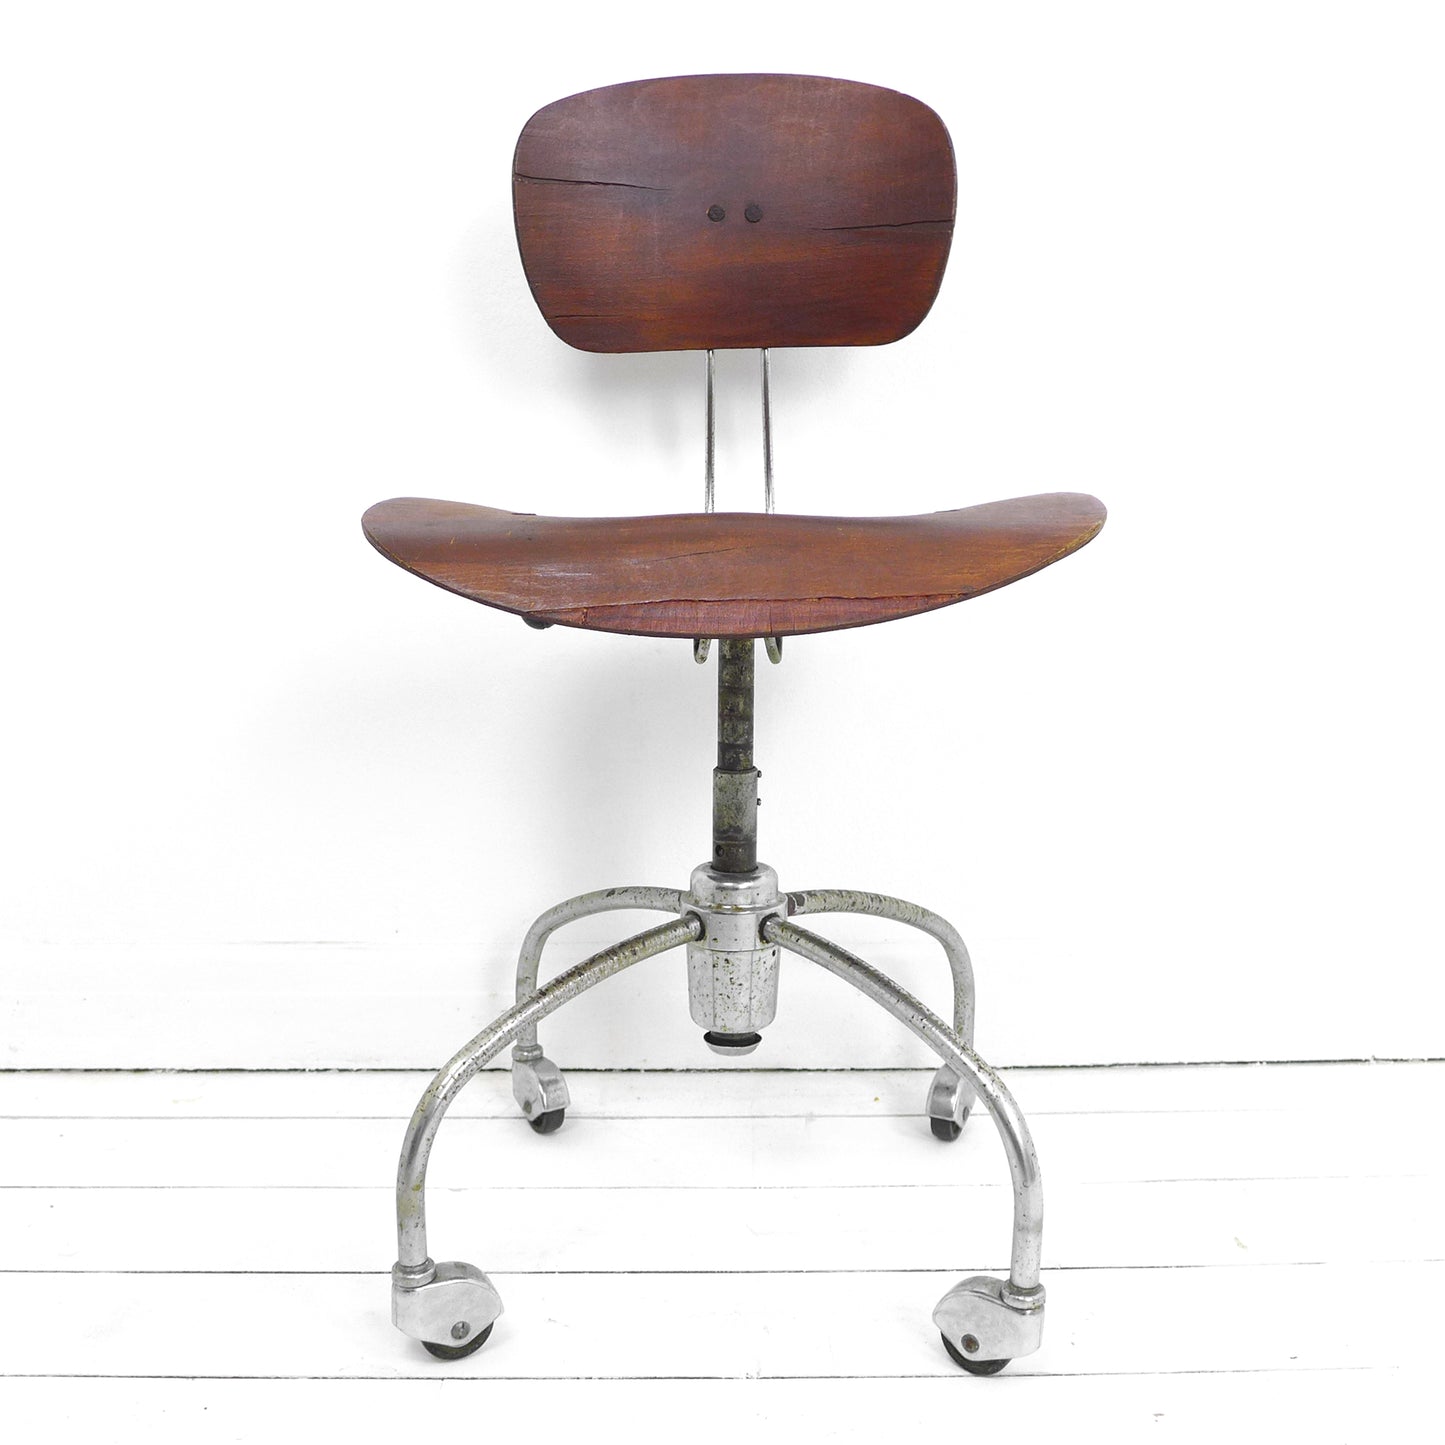 Vintage Industrial Desk Chair - Mid Century Machinist Swivel Chair